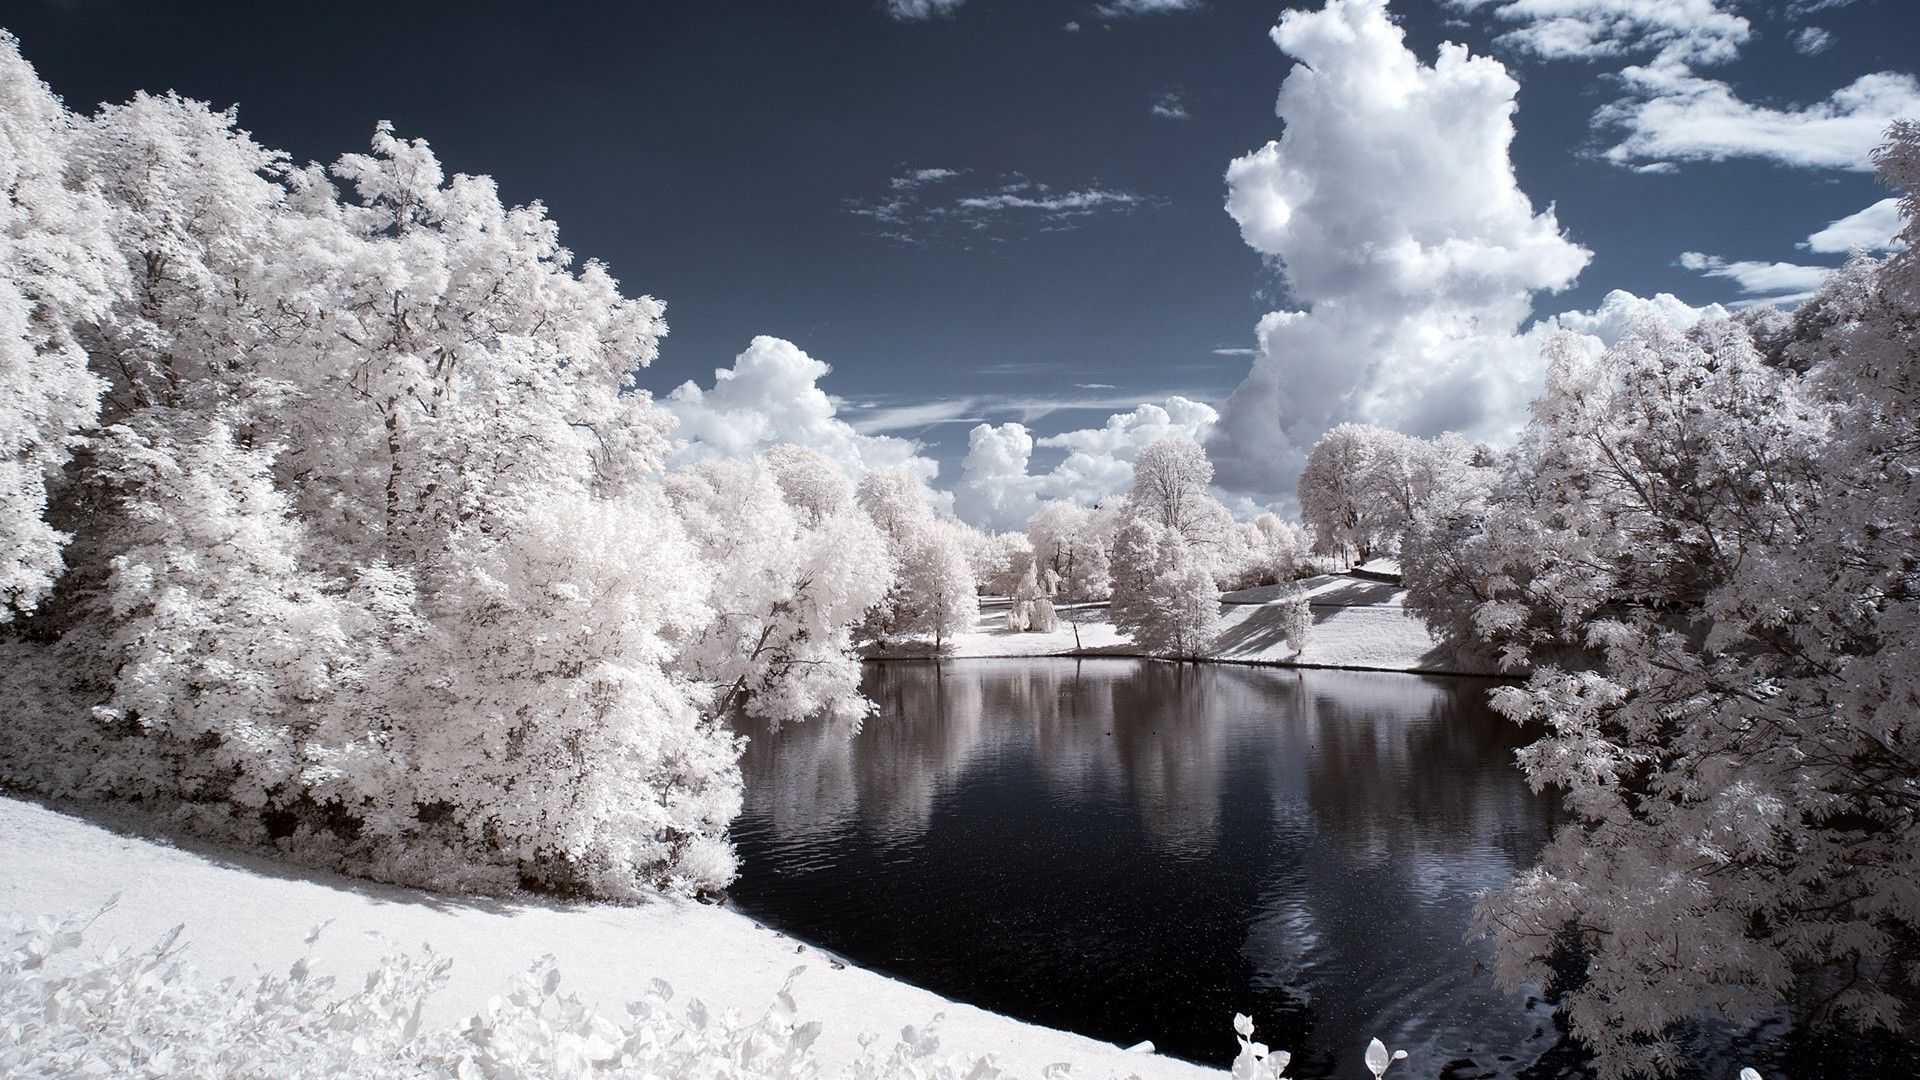 Free download White winter landscape wallpaper 1070215 [1920x1080] for